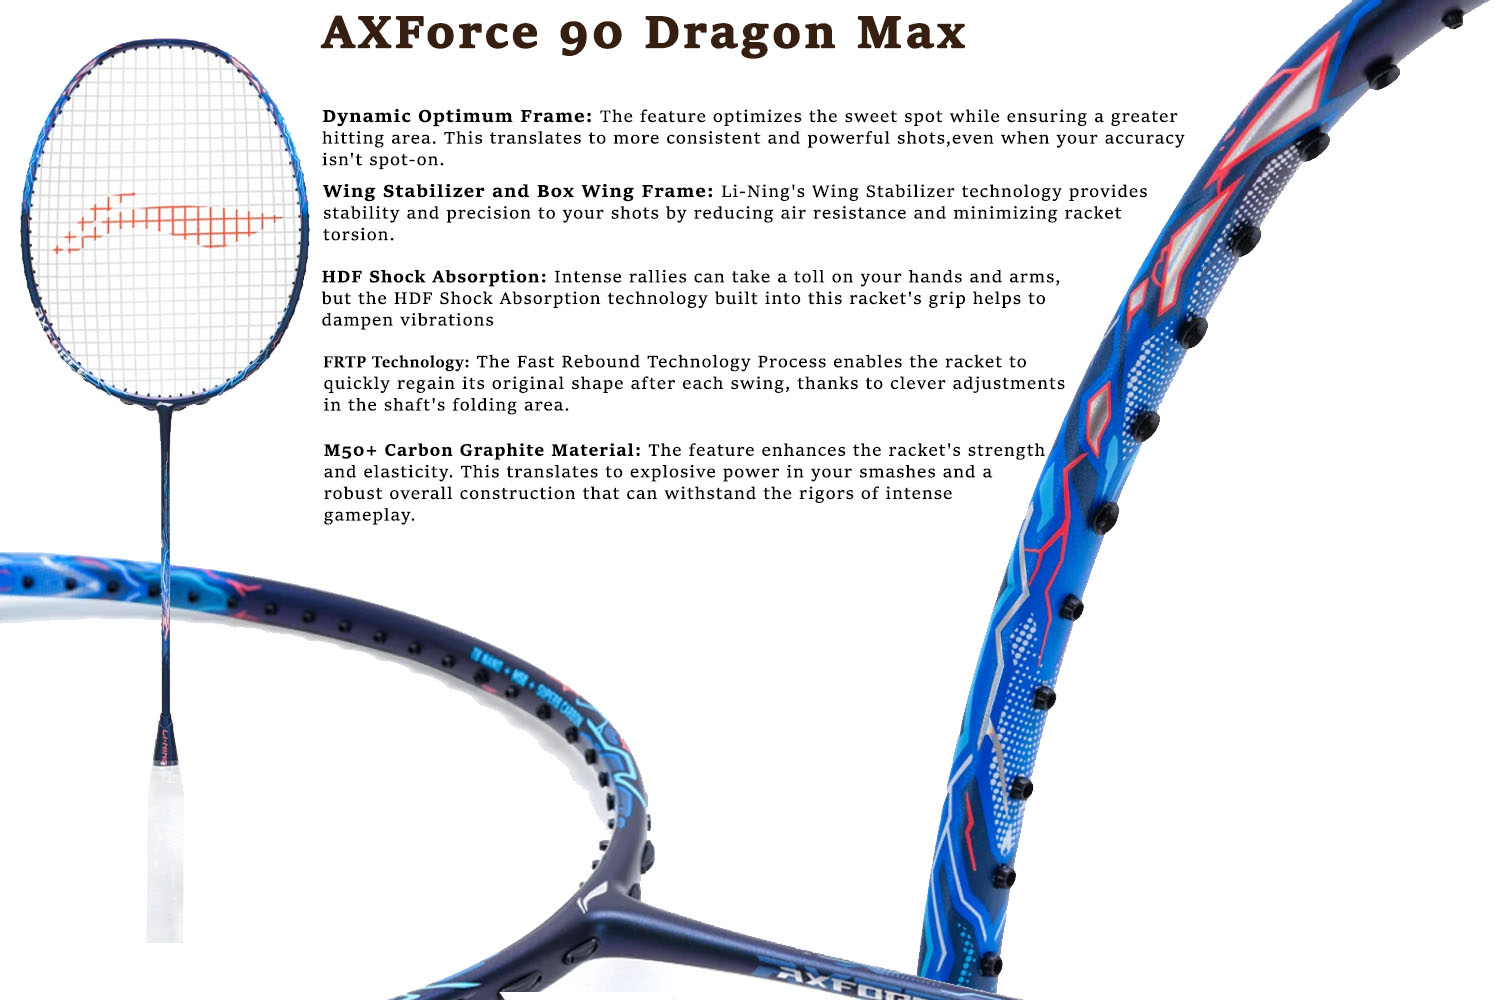 LI ning Axforce 90 dragon max badminton racket details